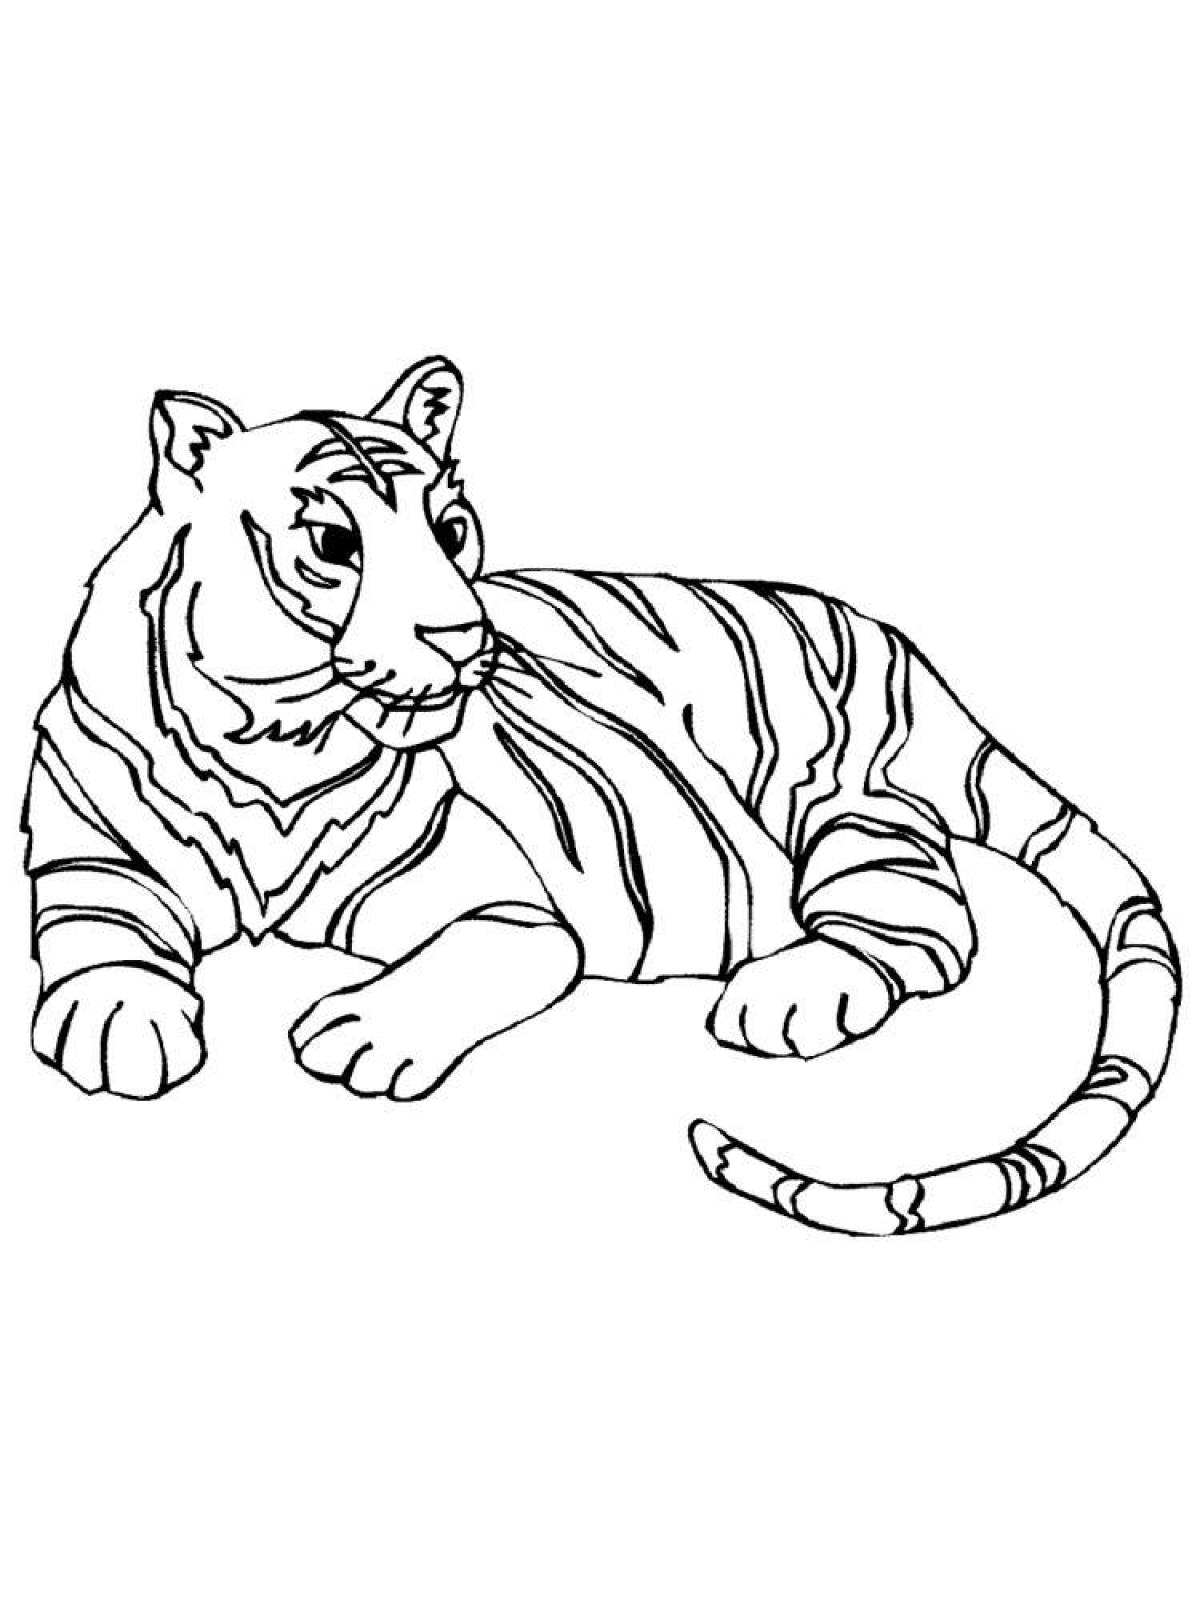 Coloring book beckoning siberian tiger